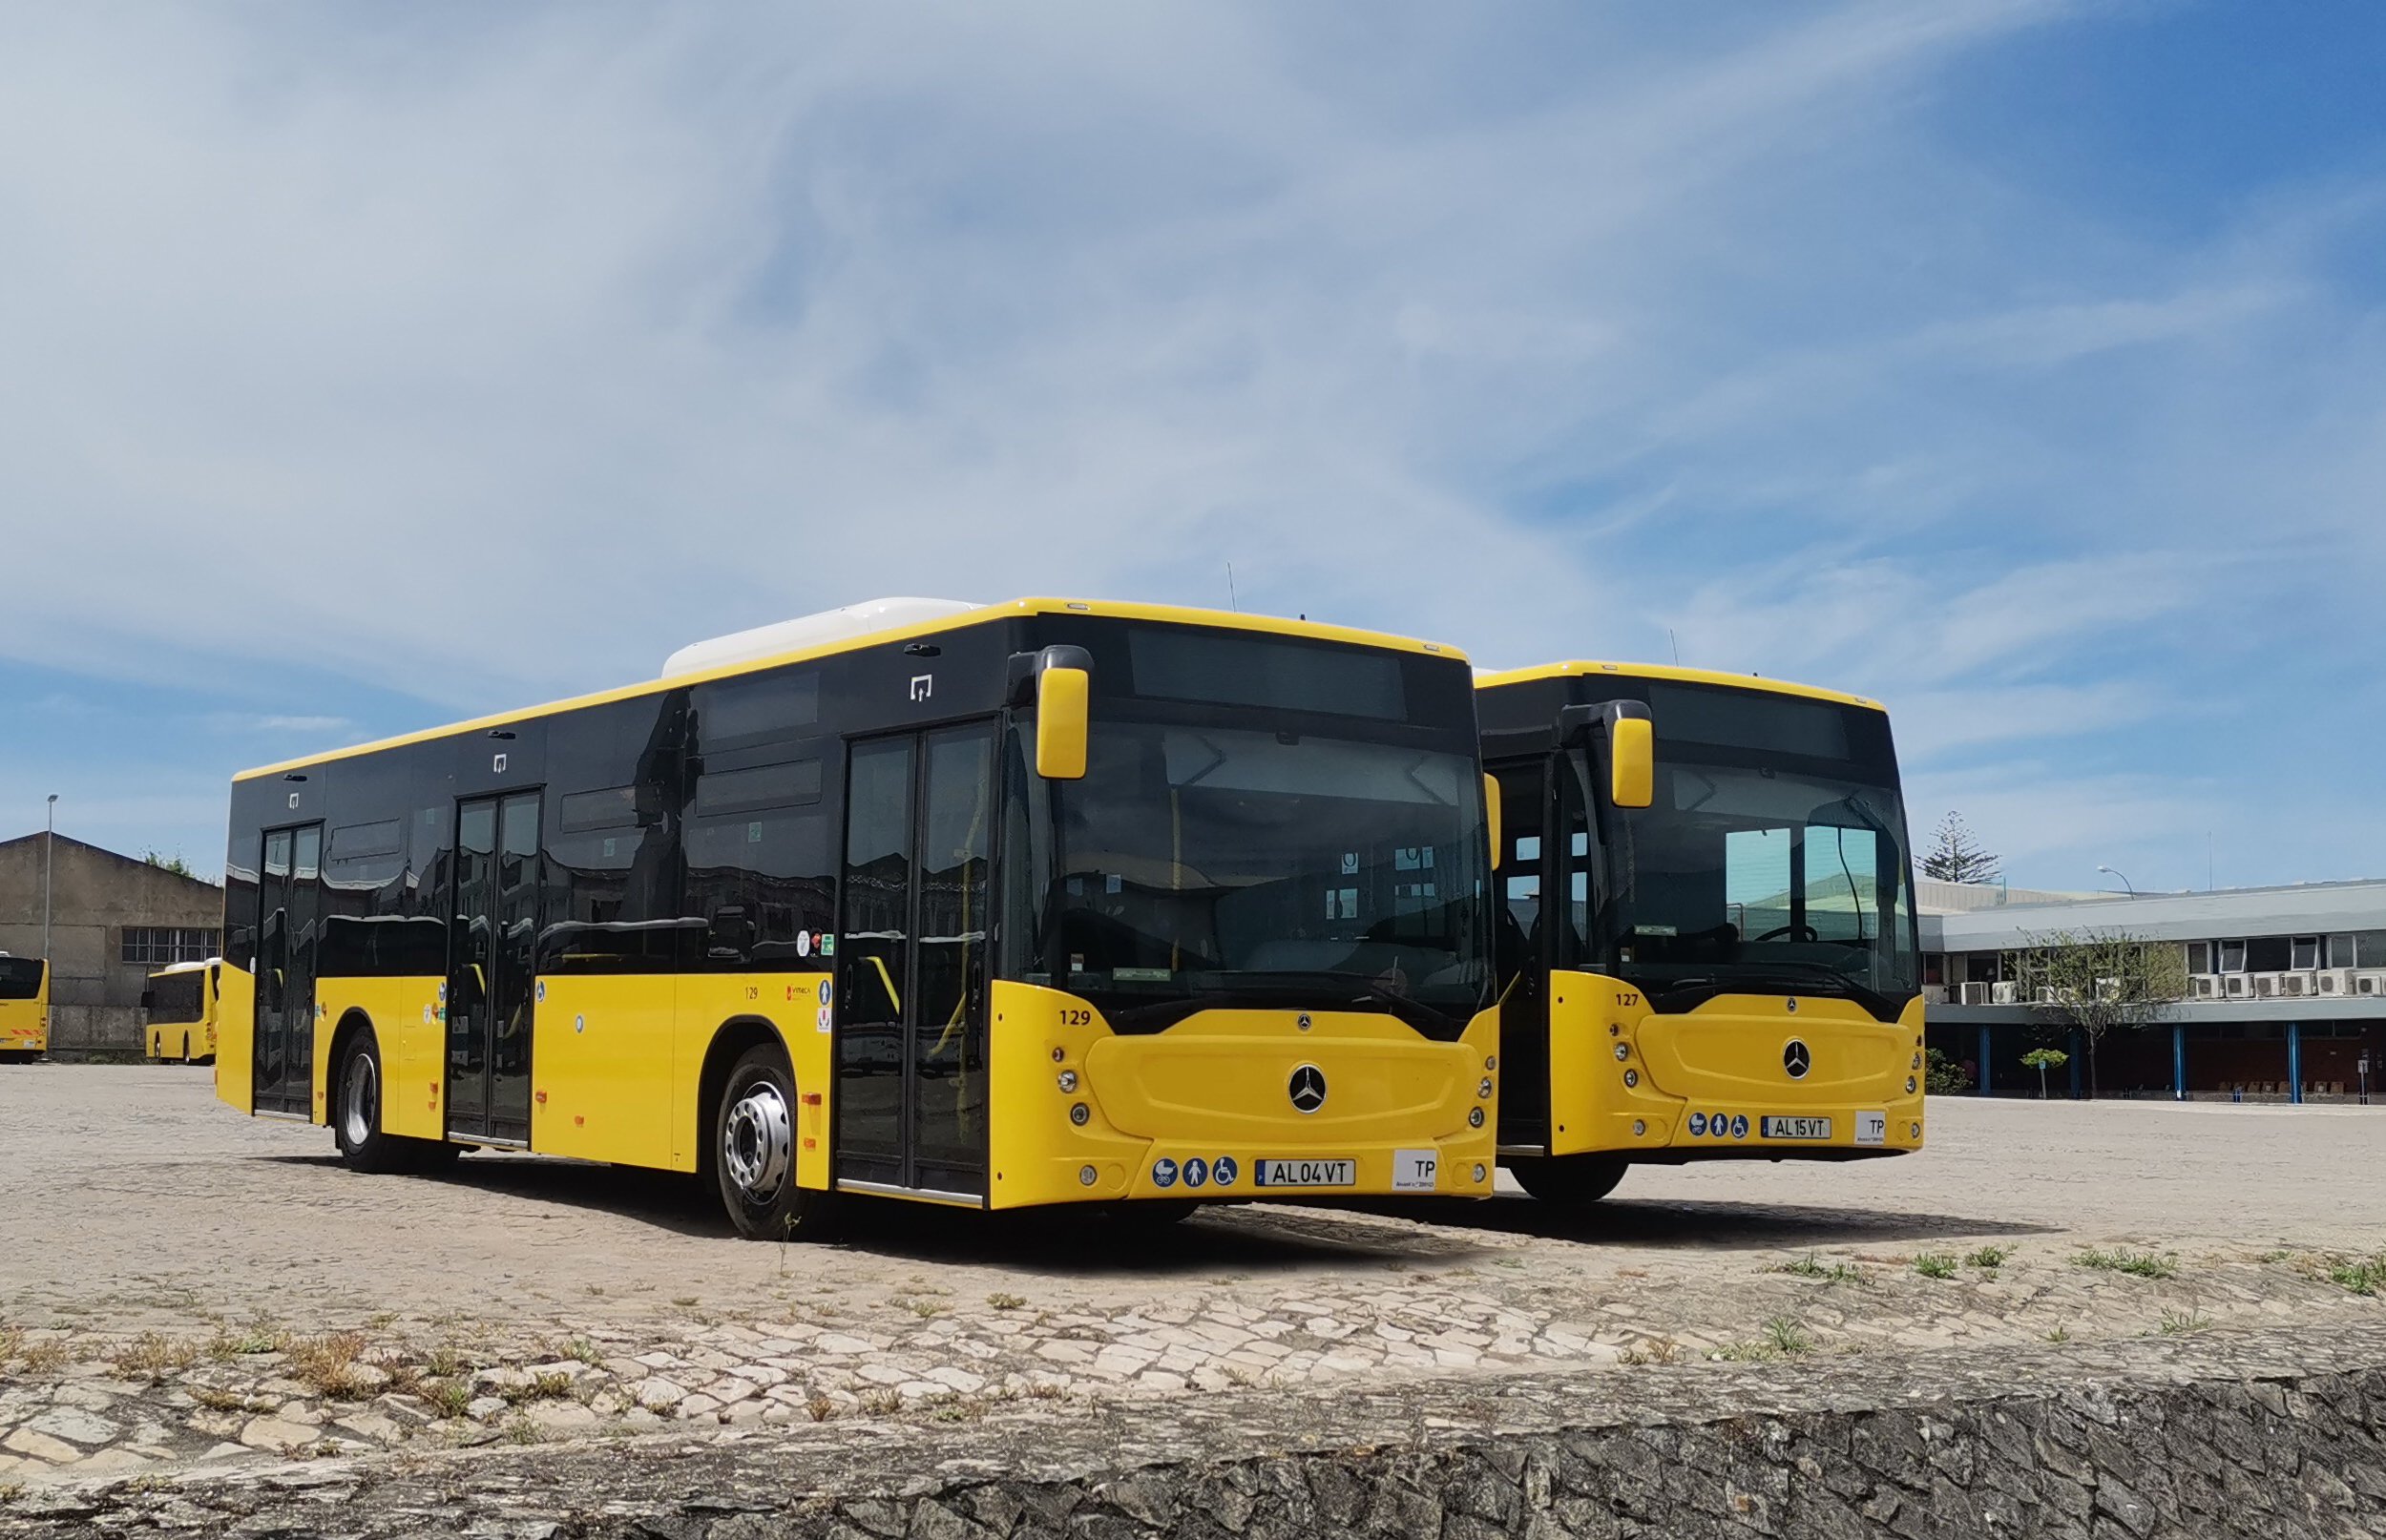 Created through the merging of two large public transportation companies in Lisbon, Viação Alvorada operates a fleet of 450 vehicles across the Amadora, Cacém, Carnaxide, Oeiras and Sintra regions of Portu